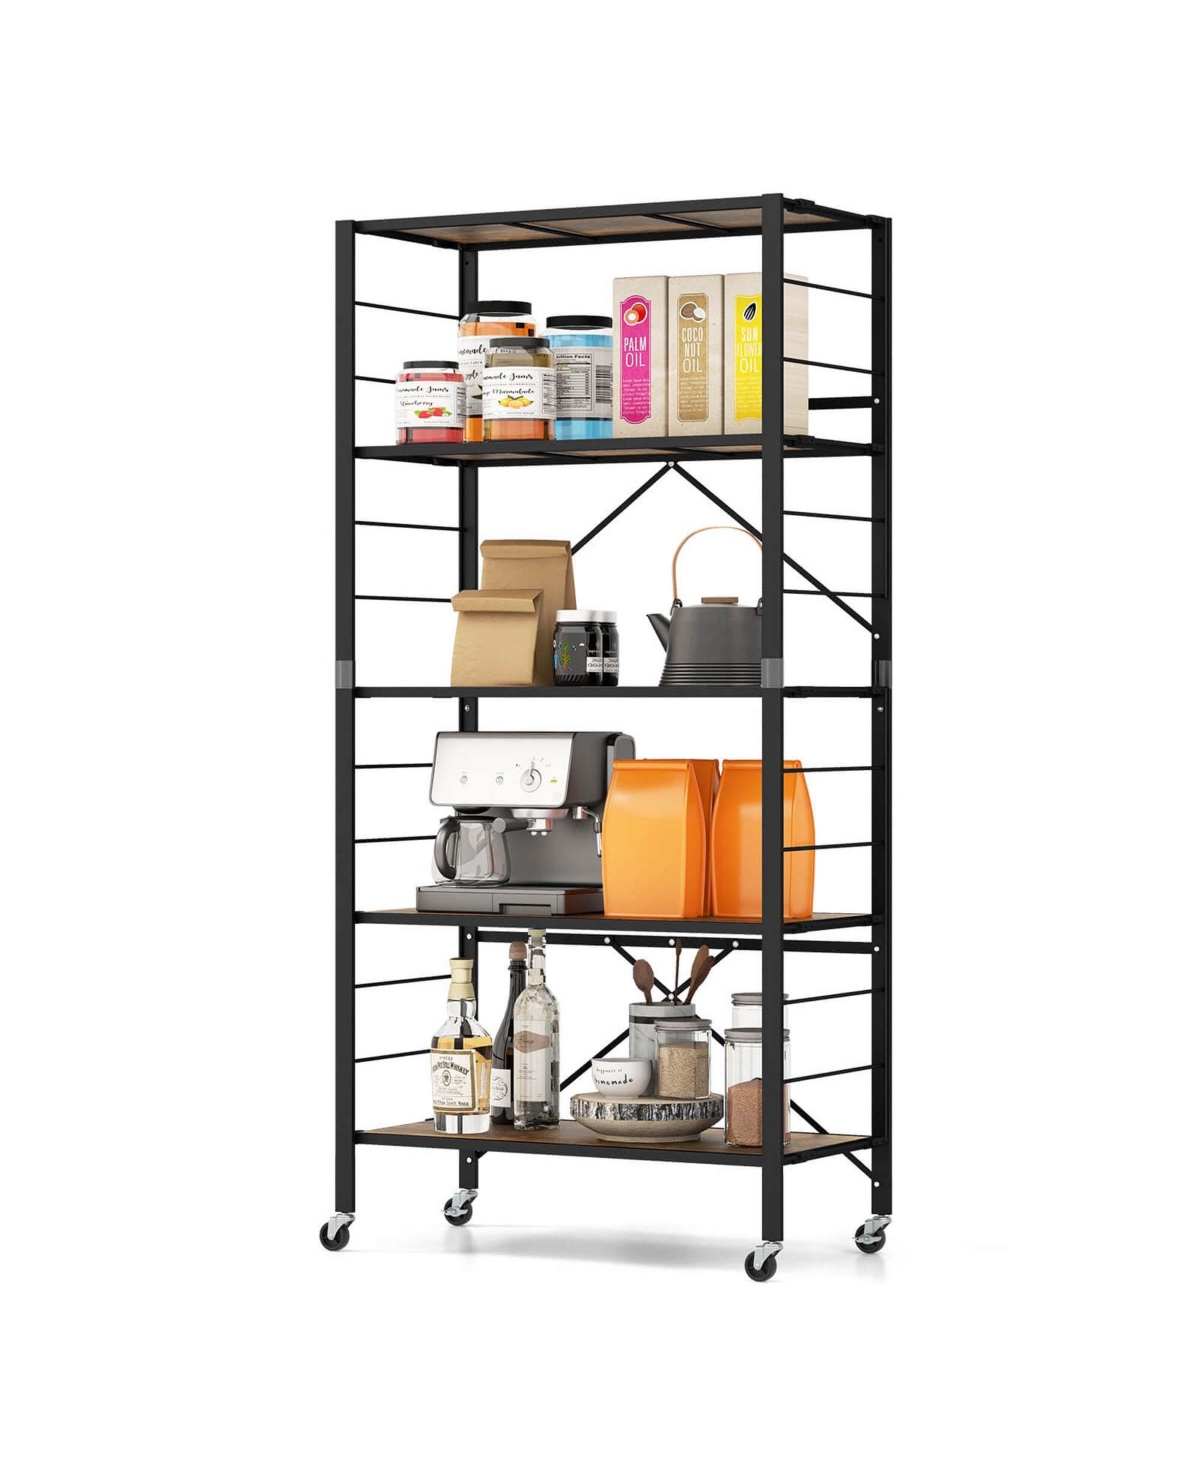 5-Tier Folding Shelf Free Diy Design Shelving Unit with 4 Universal Wheels Kitchen - Black